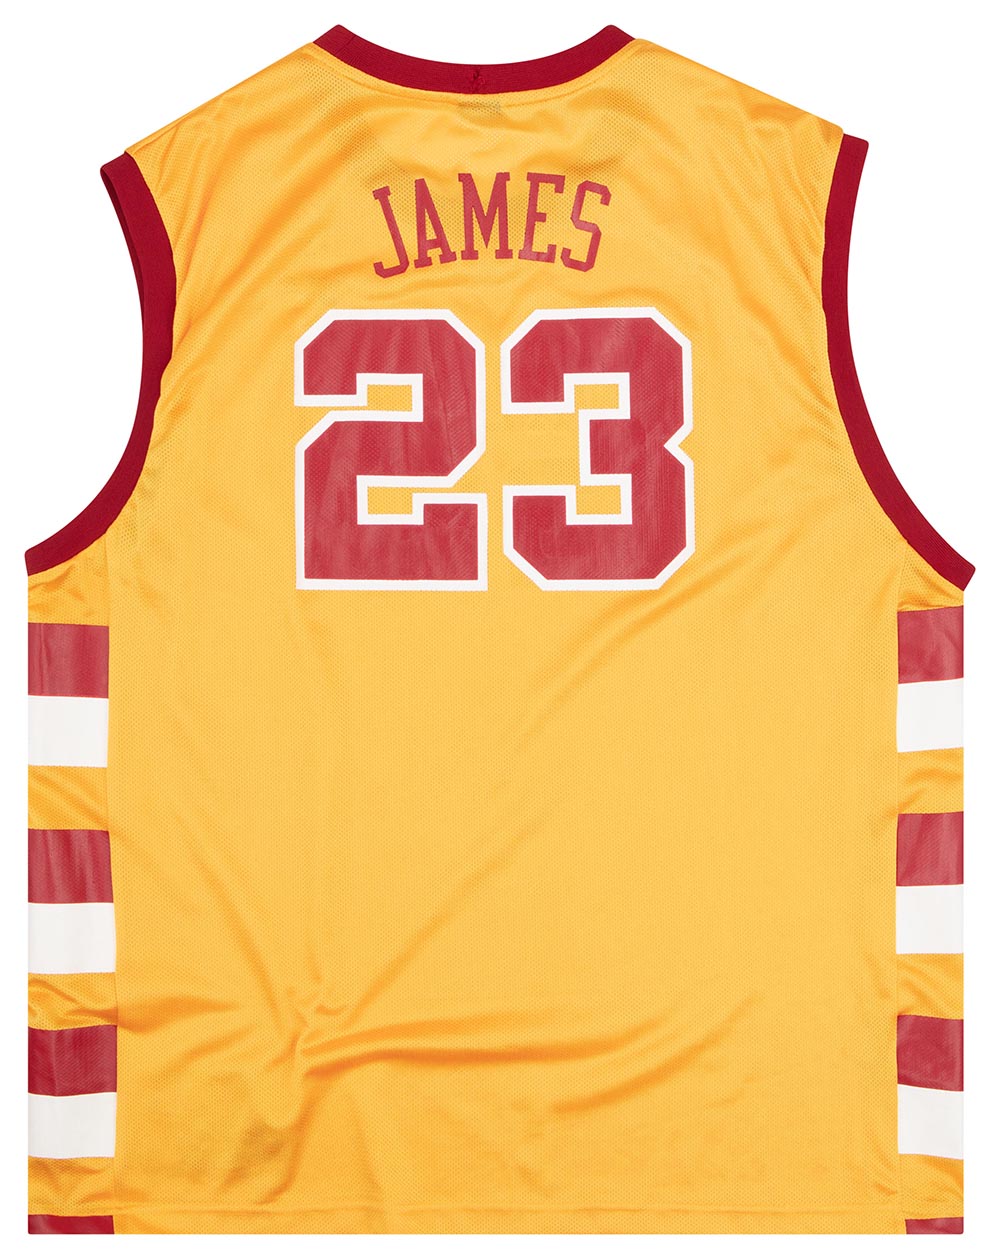 Cleveland Cavaliers LeBron James Reebok NBA Jersey